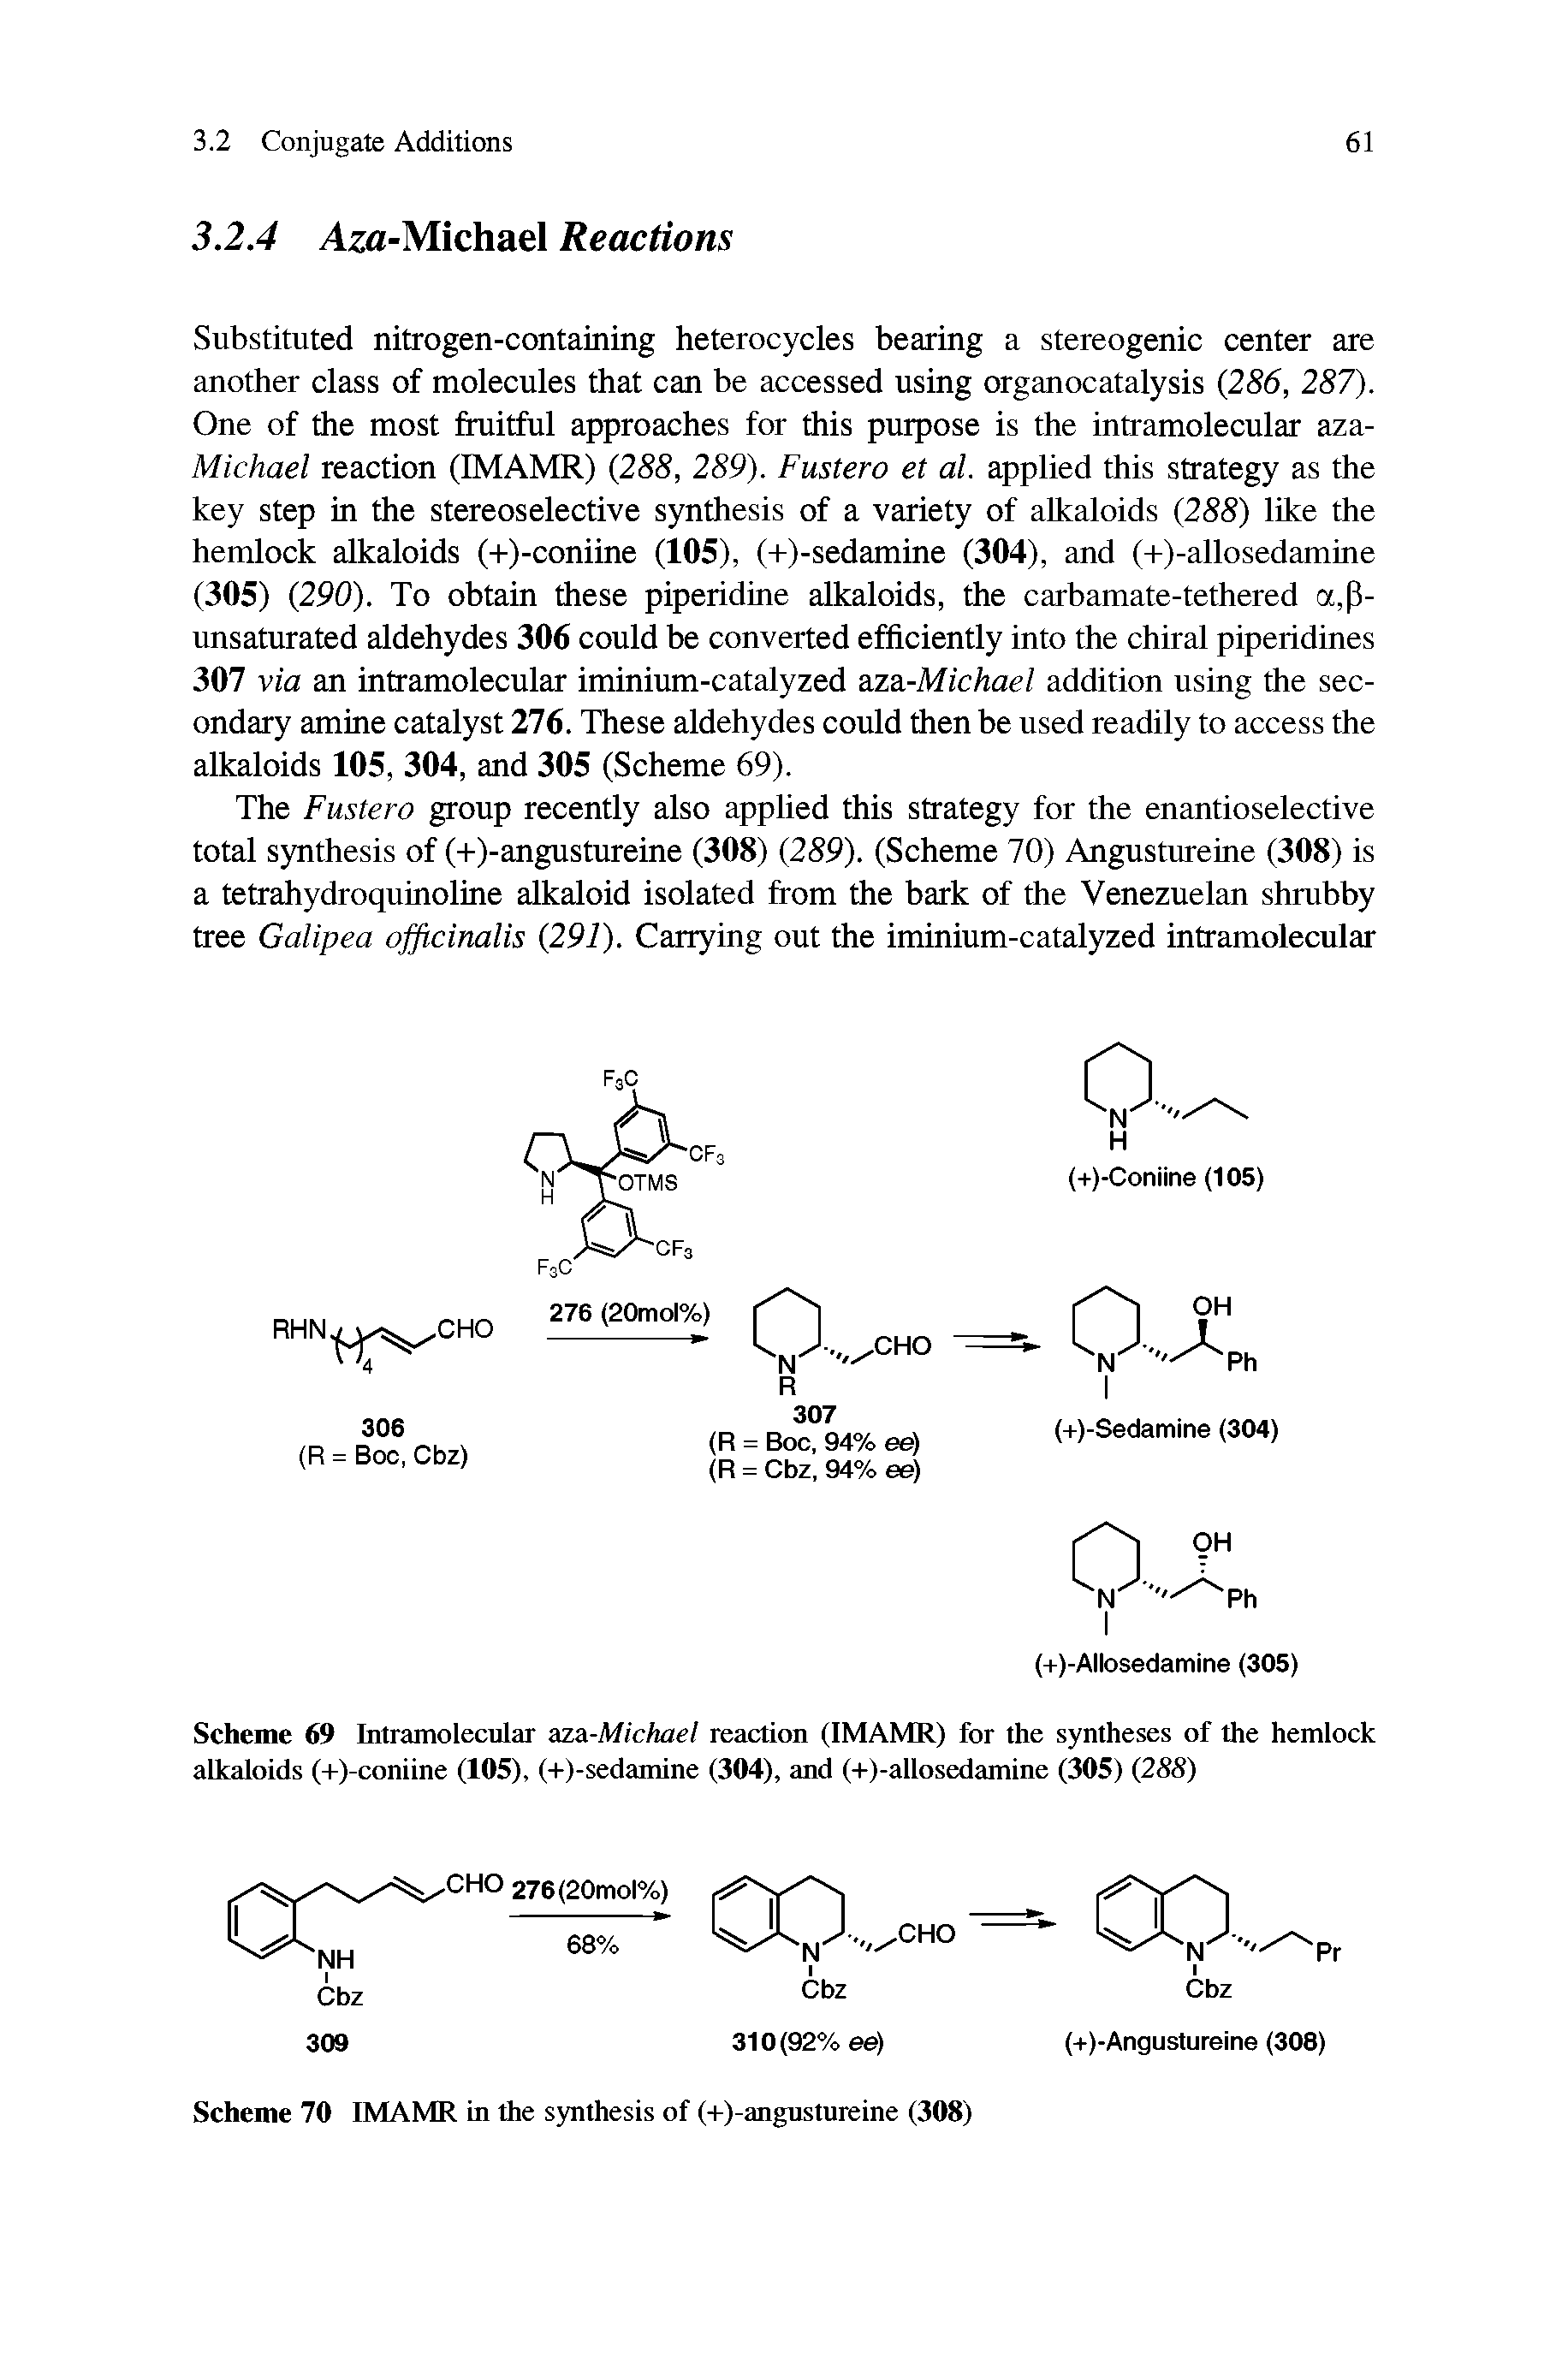 Scheme 69 Intramolecular azsi-Michael reaction (IMAMR) for the syntheses of the hemlock alkaloids (+)-coniine (105), (+)-sedamine (304), and (+)-allosedamine (305) 288)...